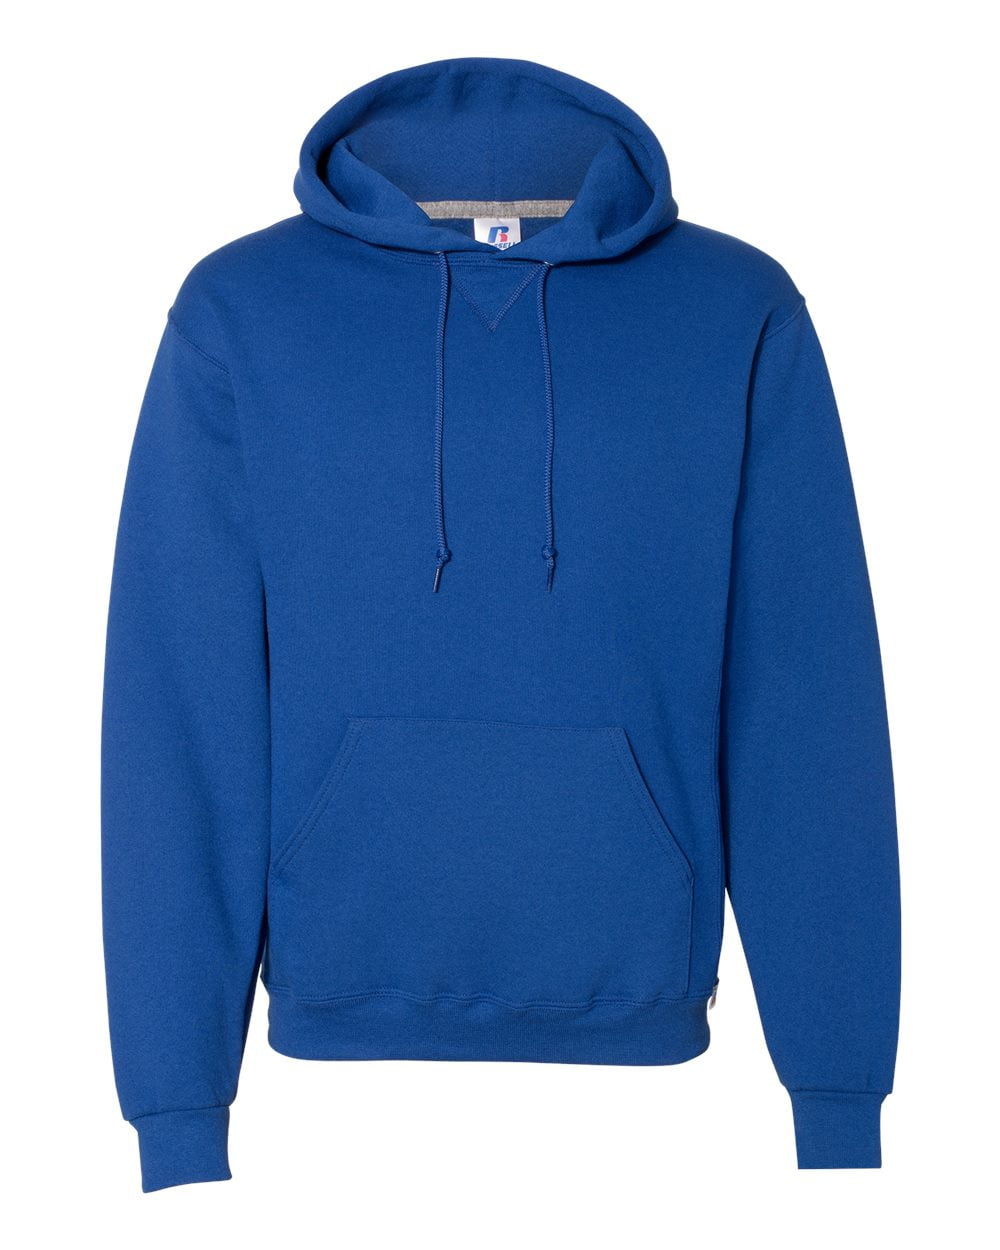 Russell Dri-Power Hooded Sweatshirt w/Pocket 695HB Royal Blue 